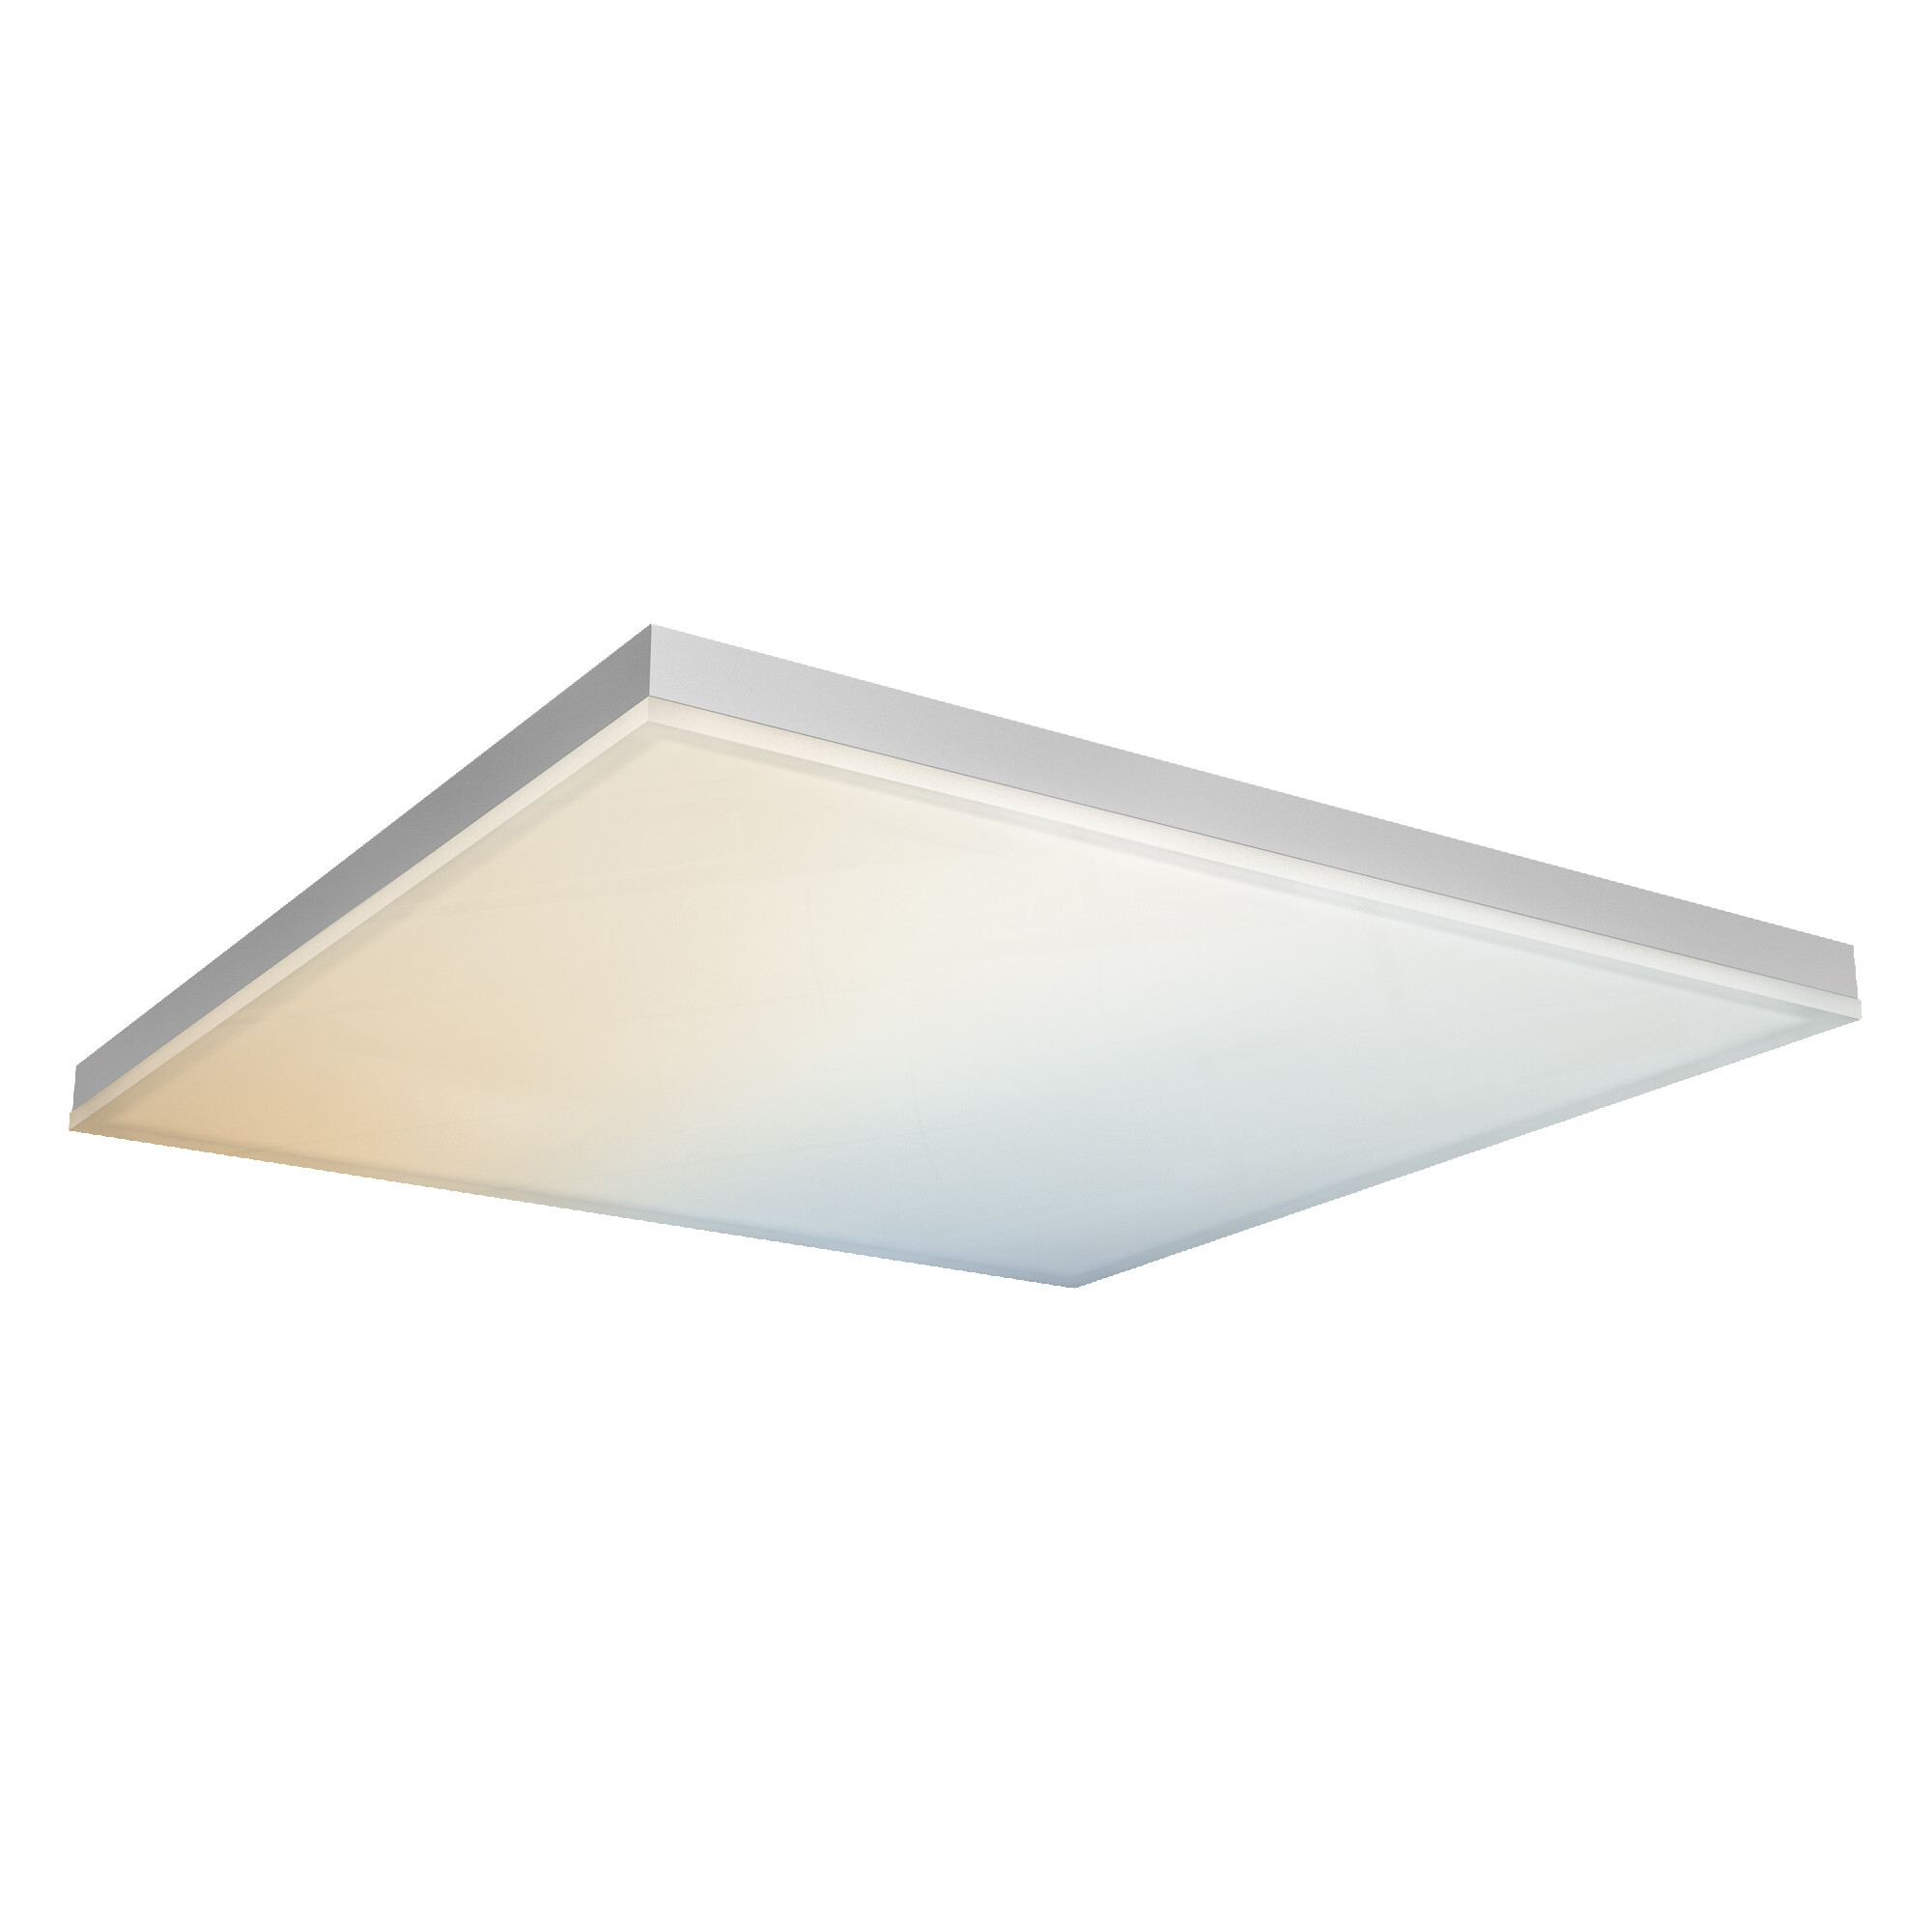 LED-Panelleuchte 'Planon' weiß 45 x 45 cm 2300 lm + product picture